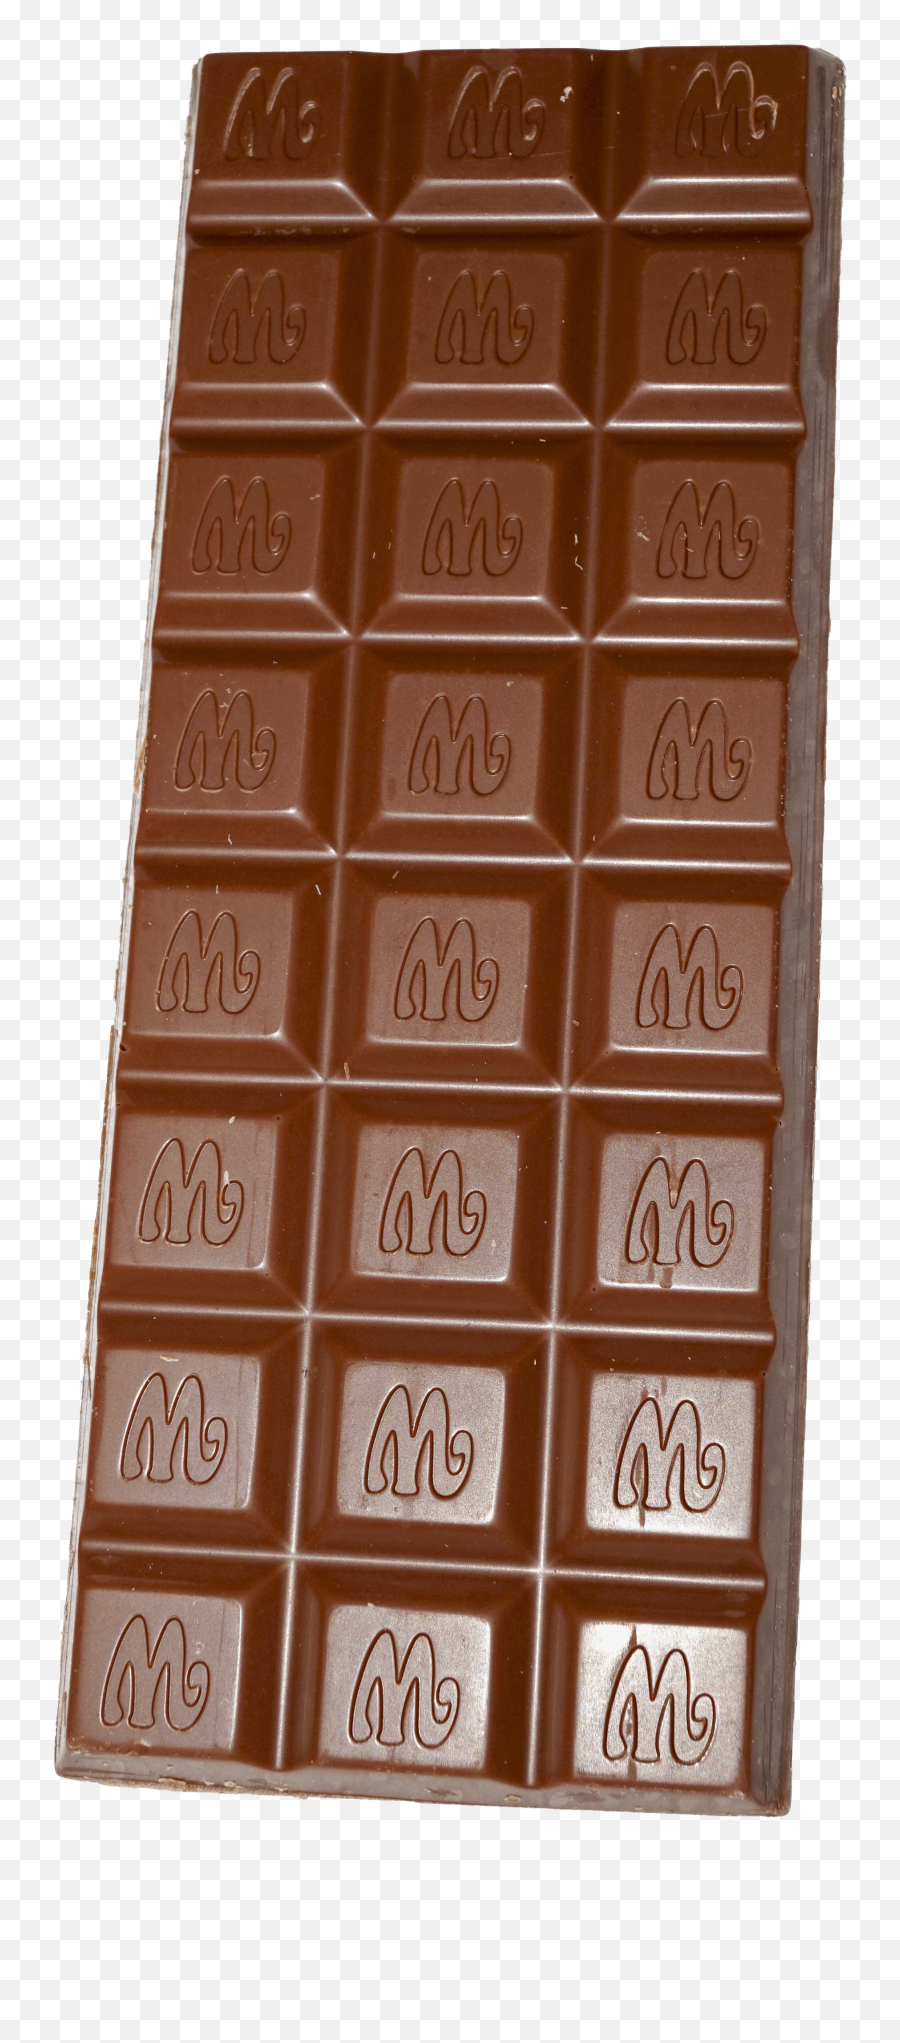 Marabou Chocolate - Chocolate Bar Transparent Background Emoji,Chocolate Milk Emoji